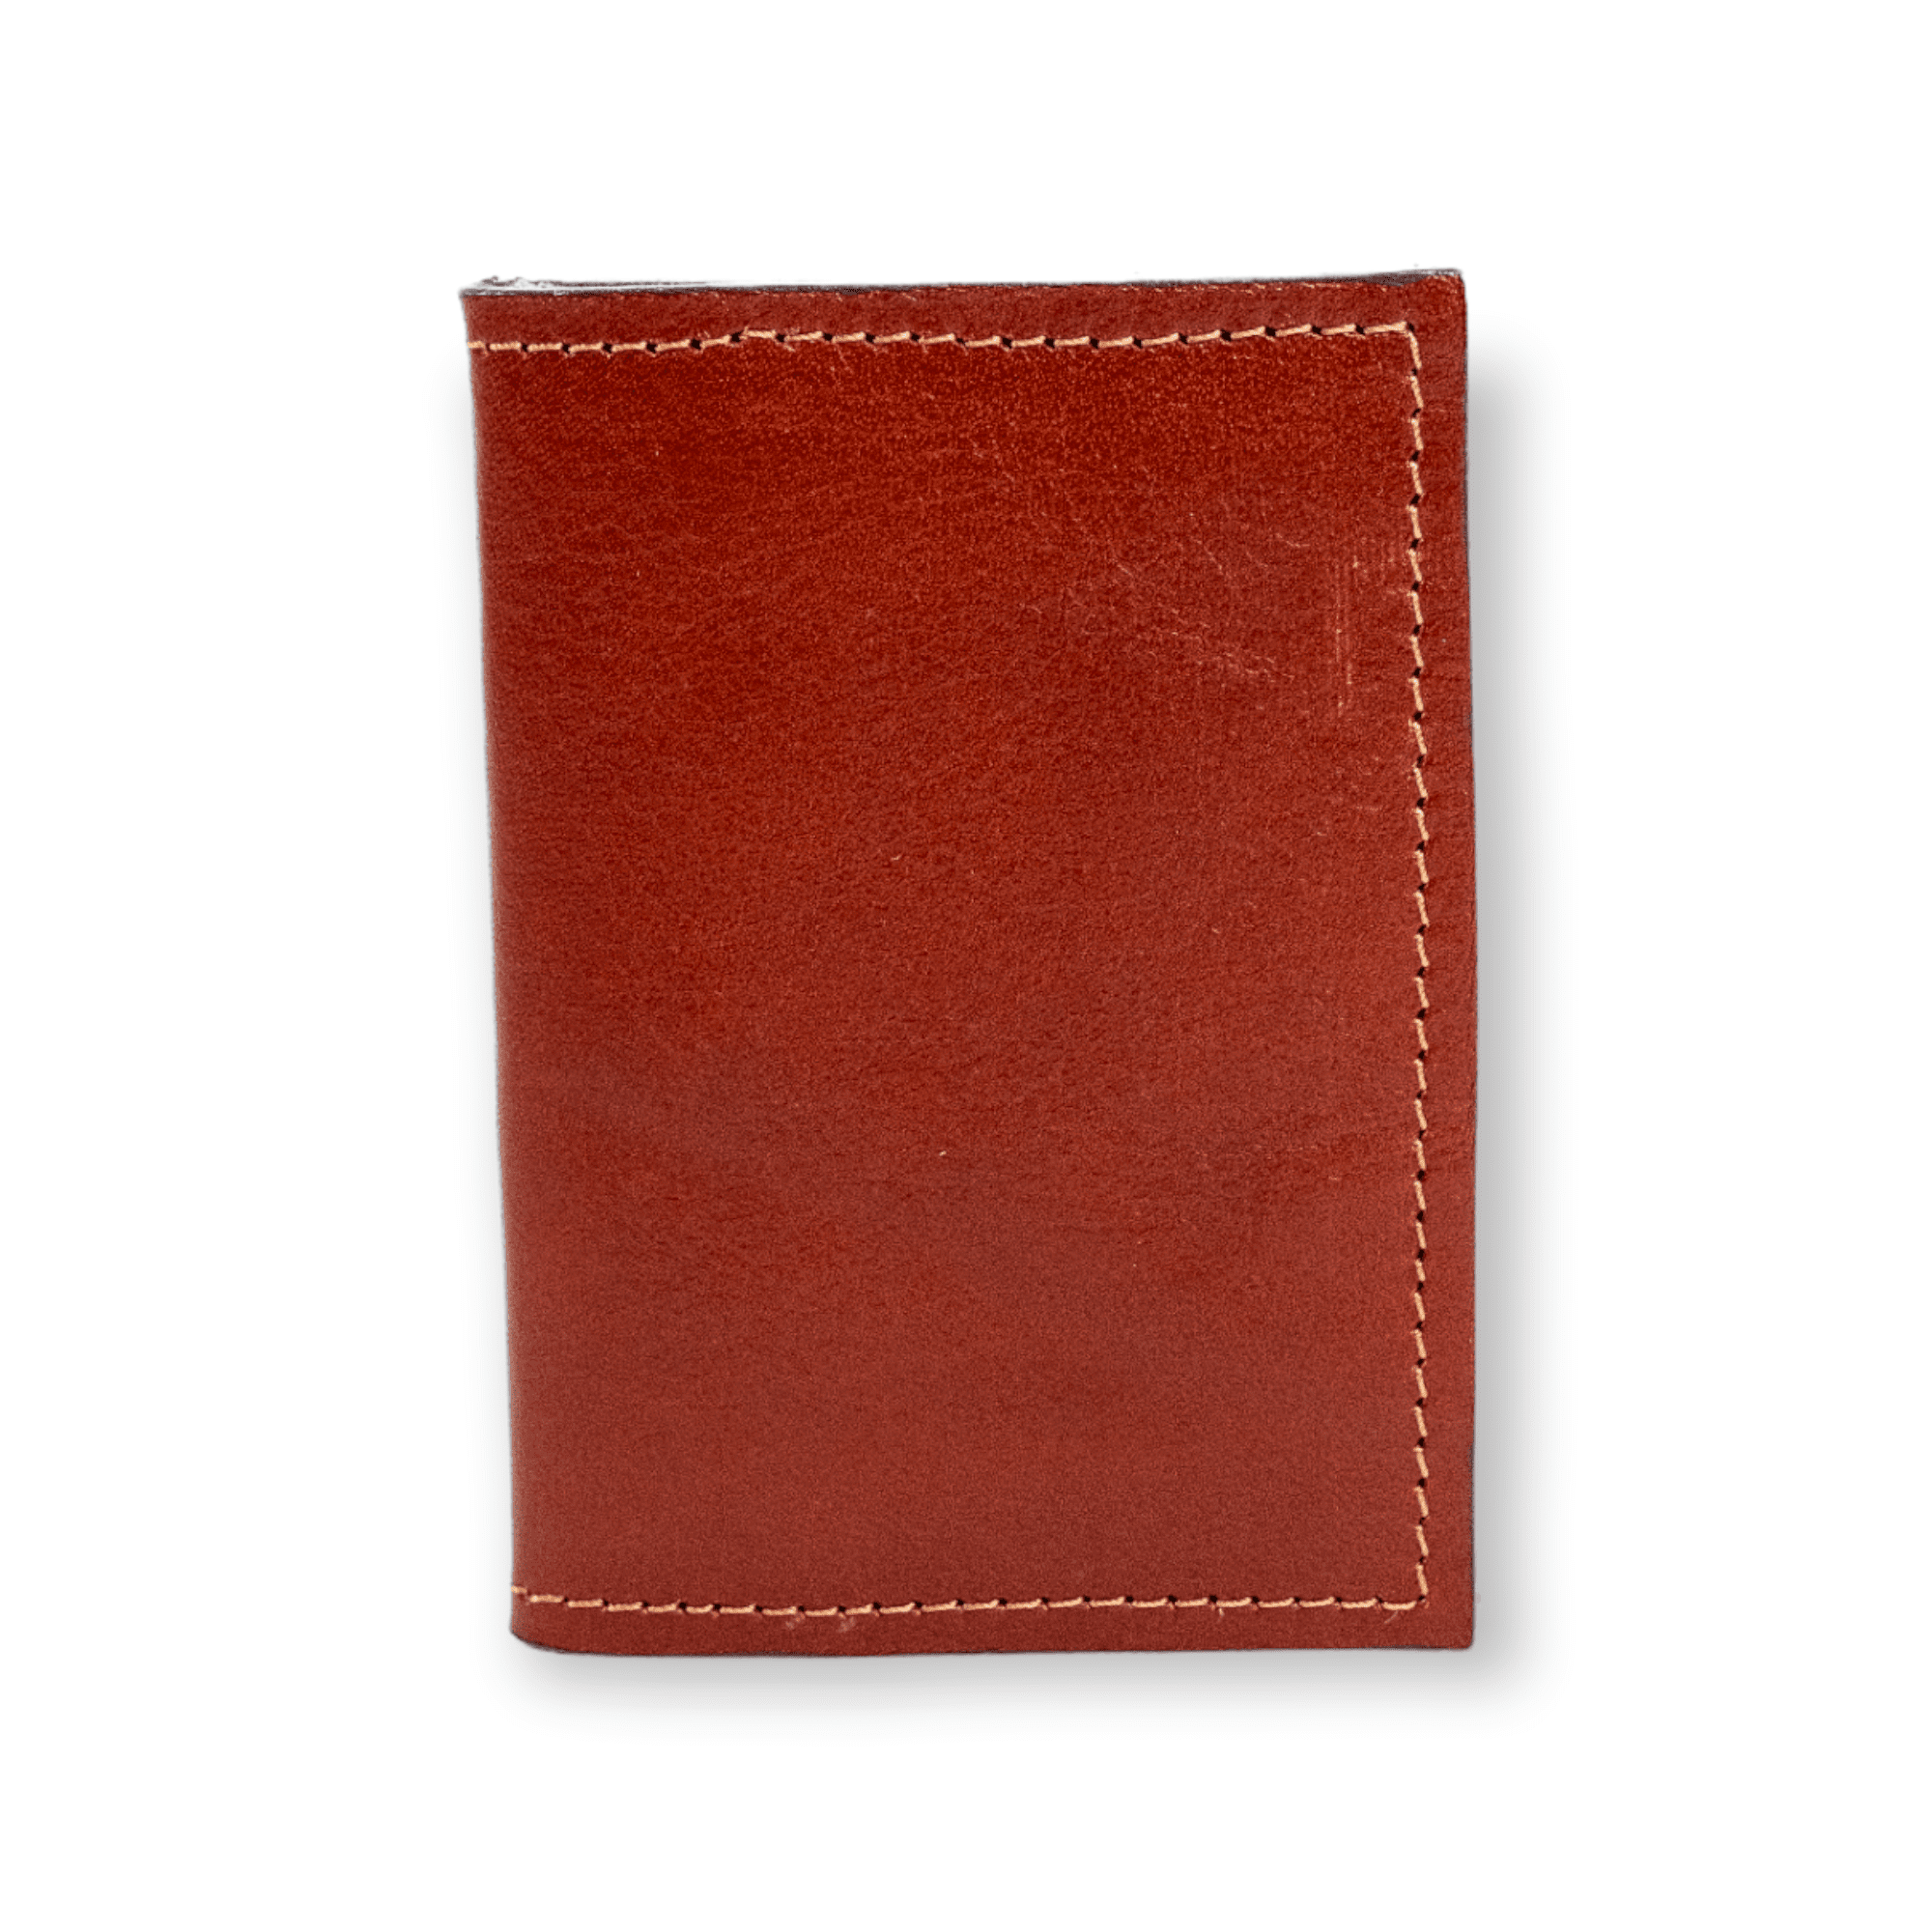 Porte-cartes n°1 – porte-cartes cuir vachette doublé made in France